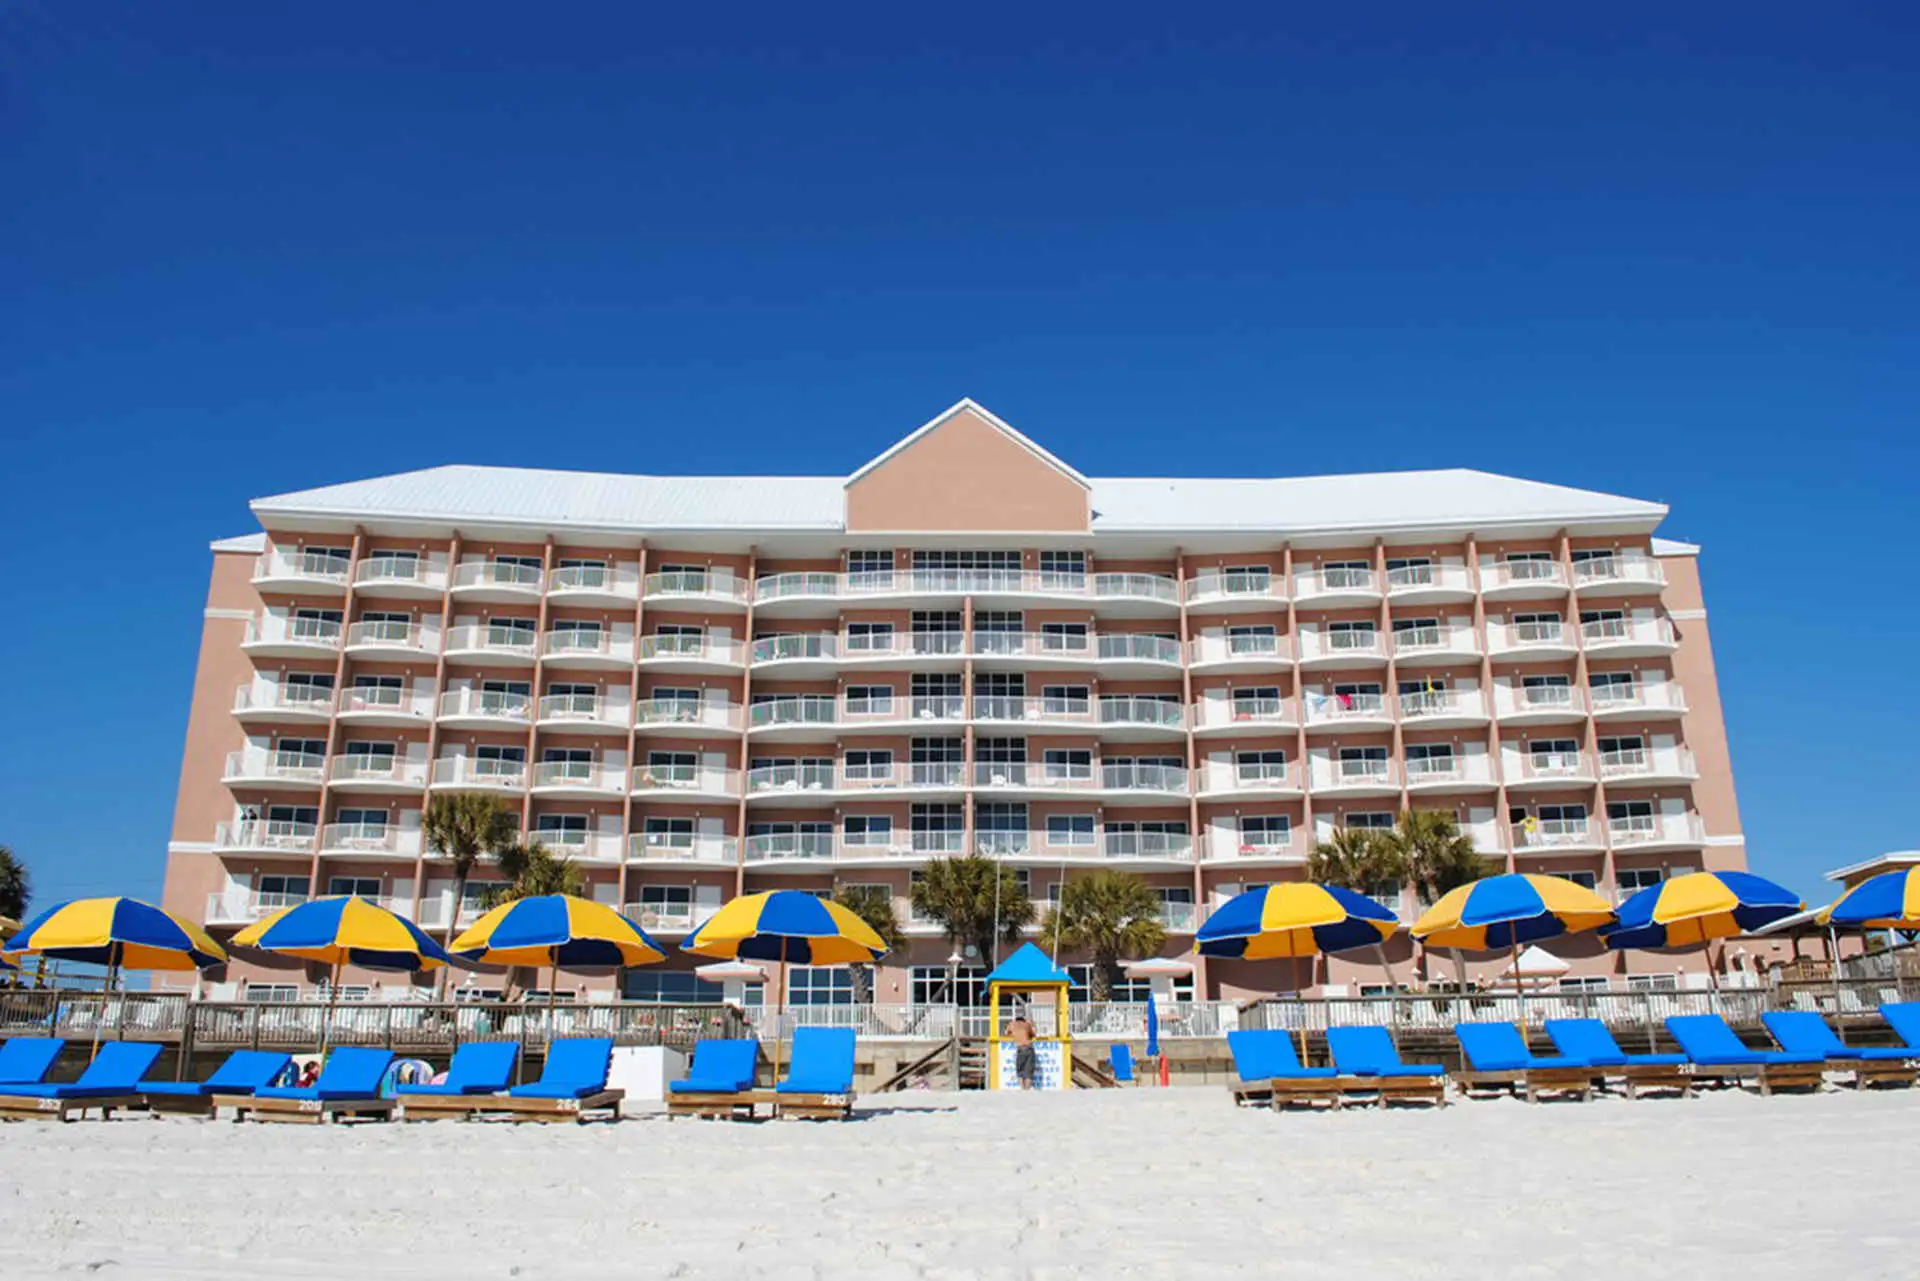 Palmetto Inn & Suites in Panama City Beach, FL